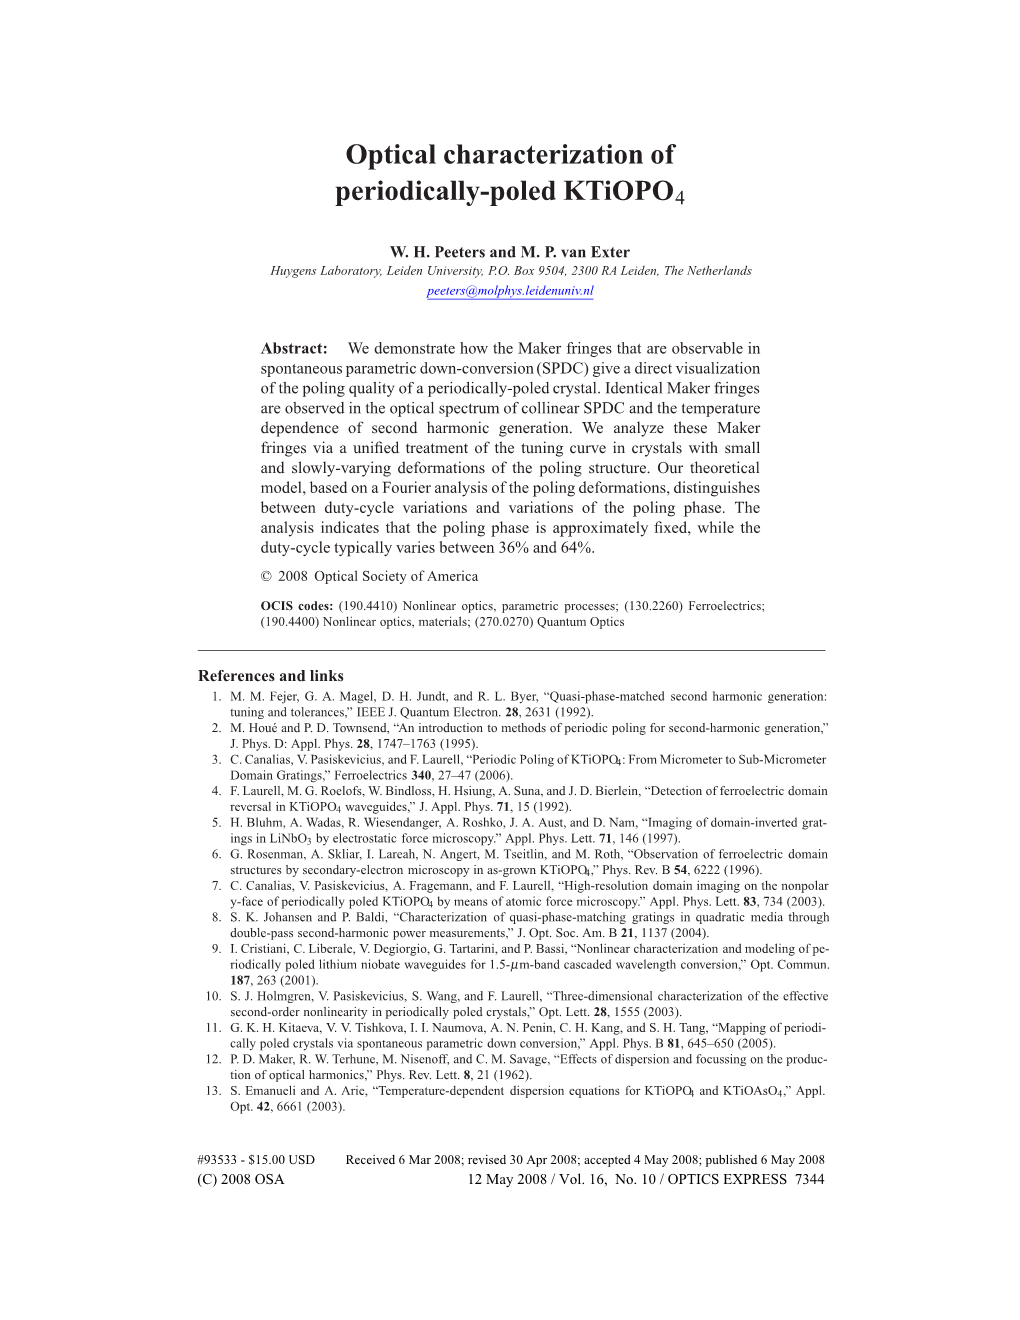 Optical Characterization of Periodically-Poled Ktiopo4